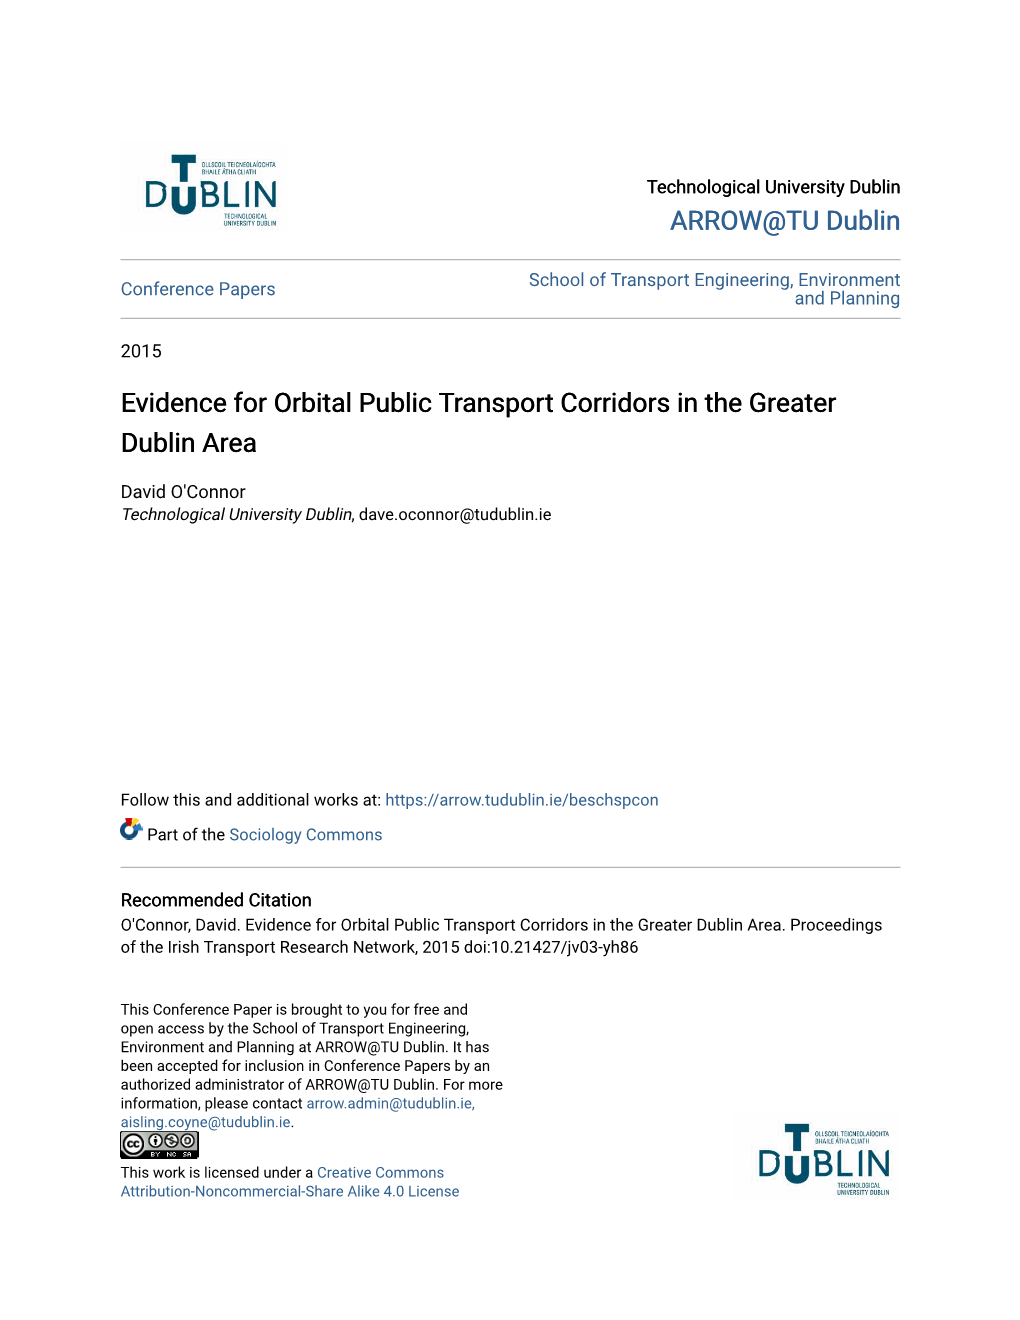 Evidence for Orbital Public Transport Corridors in the Greater Dublin Area